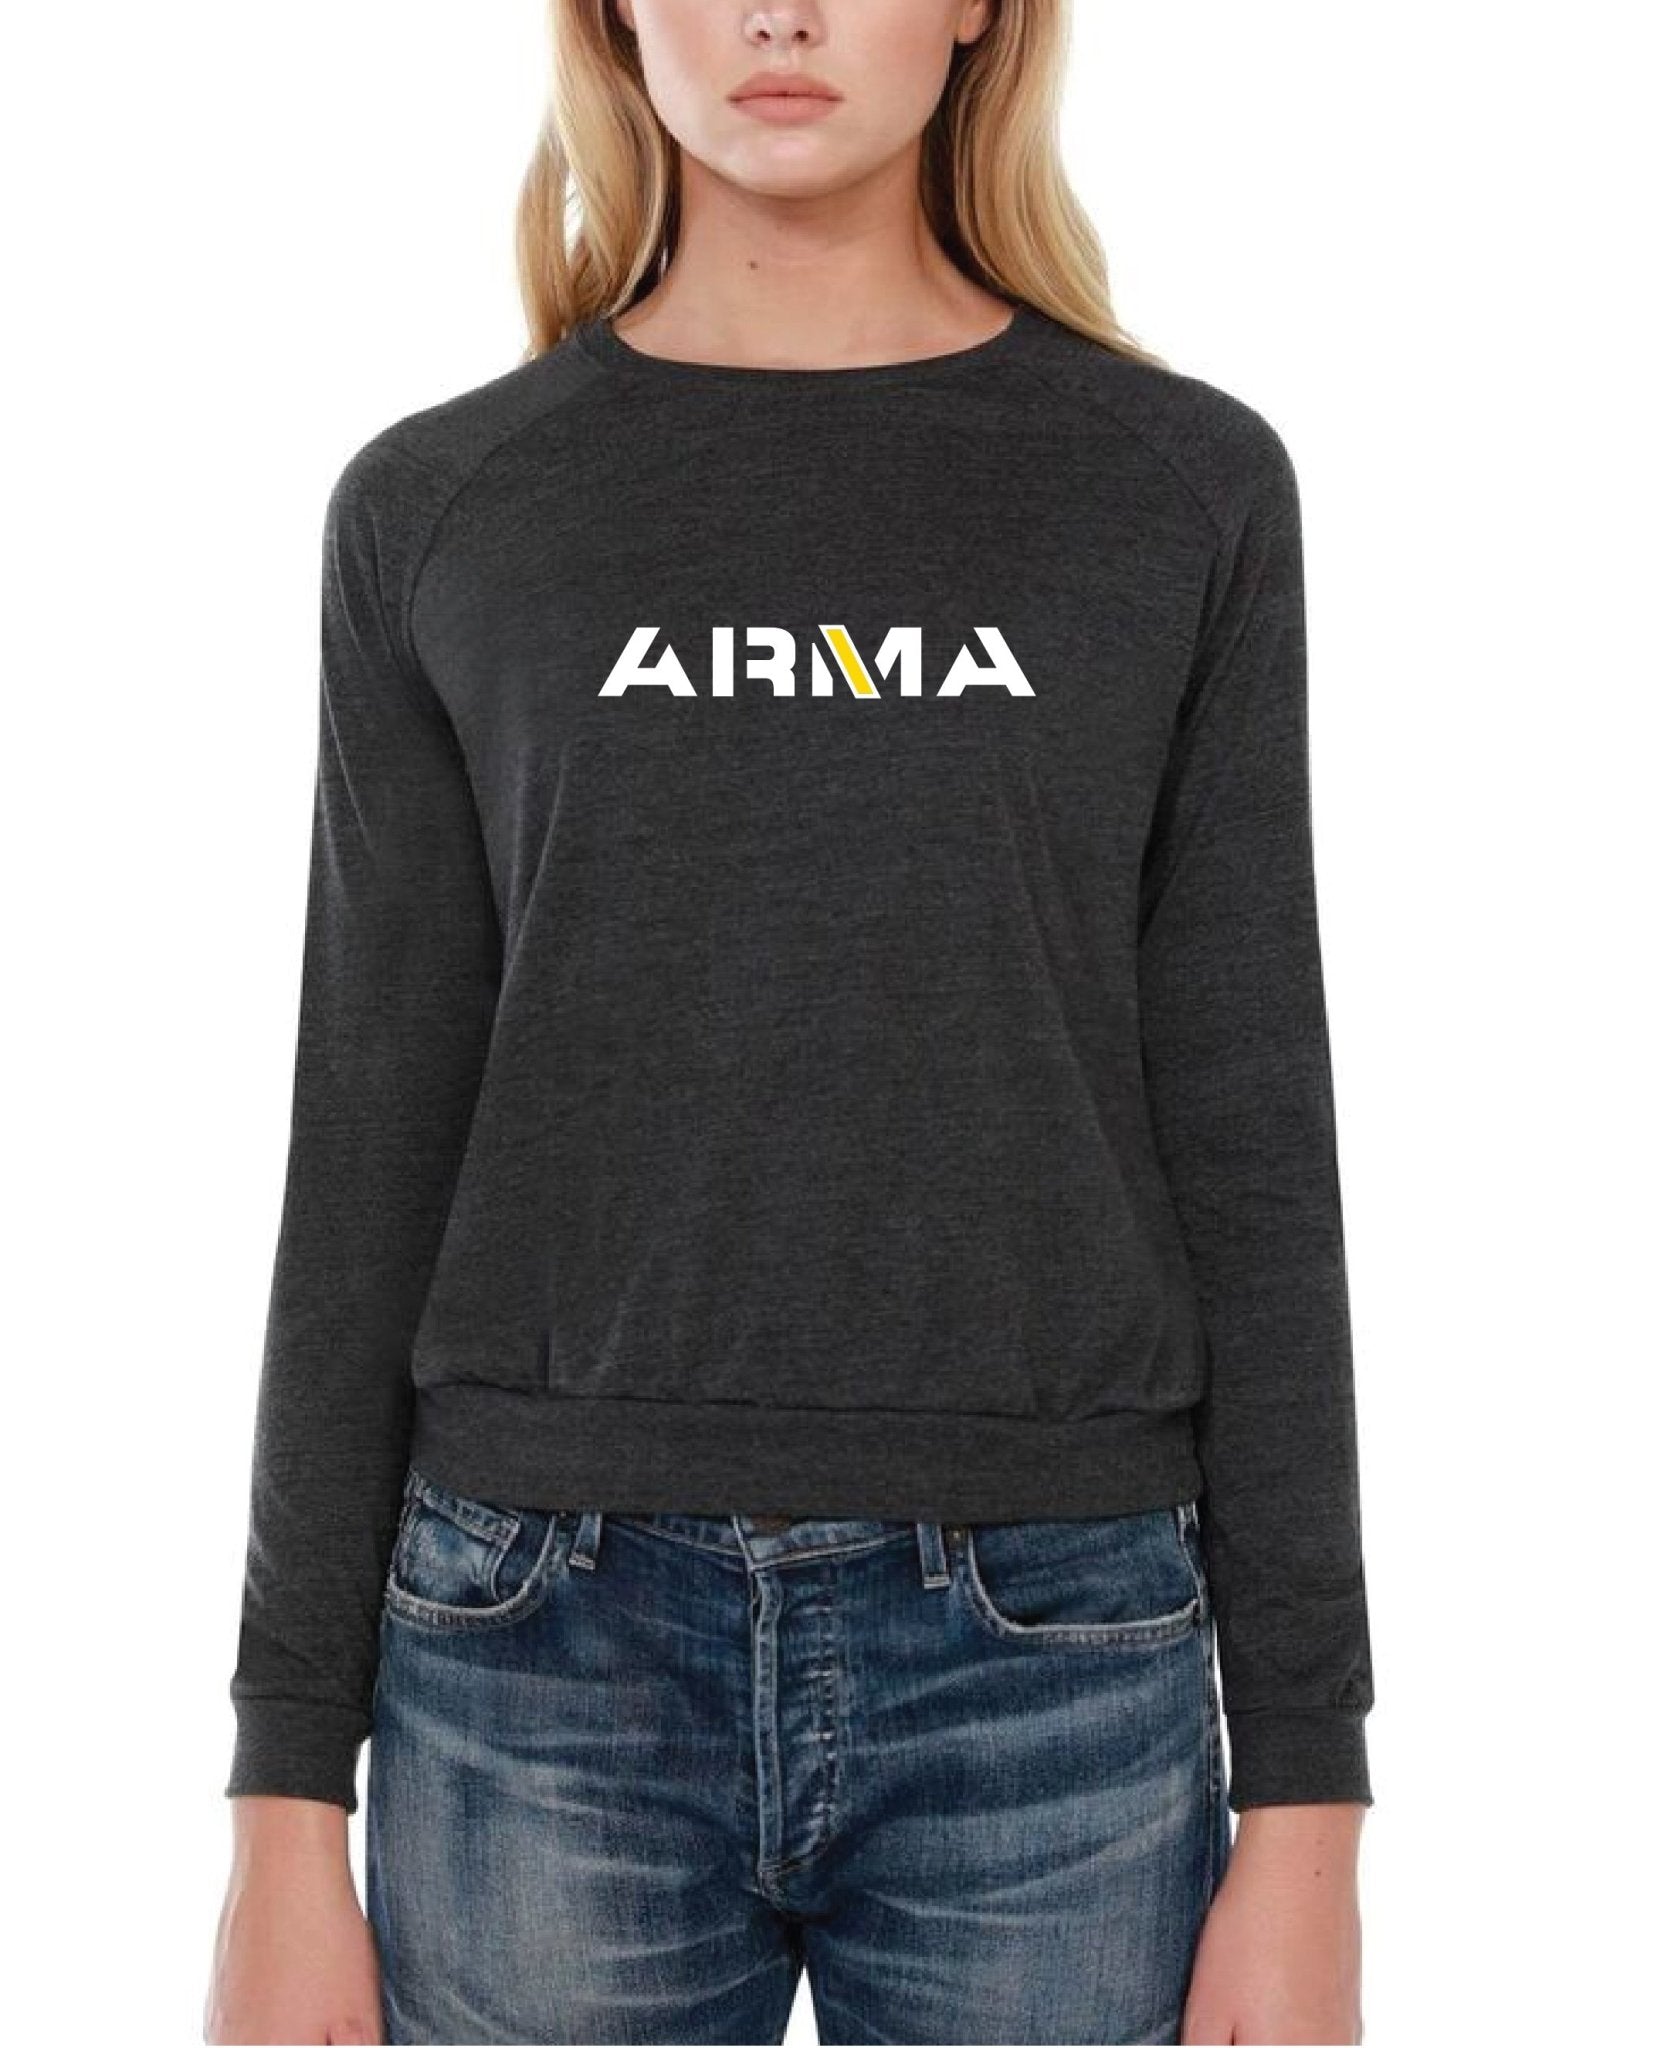 ARMA Wordmark Longsleeve (Womens) - Arma Sport